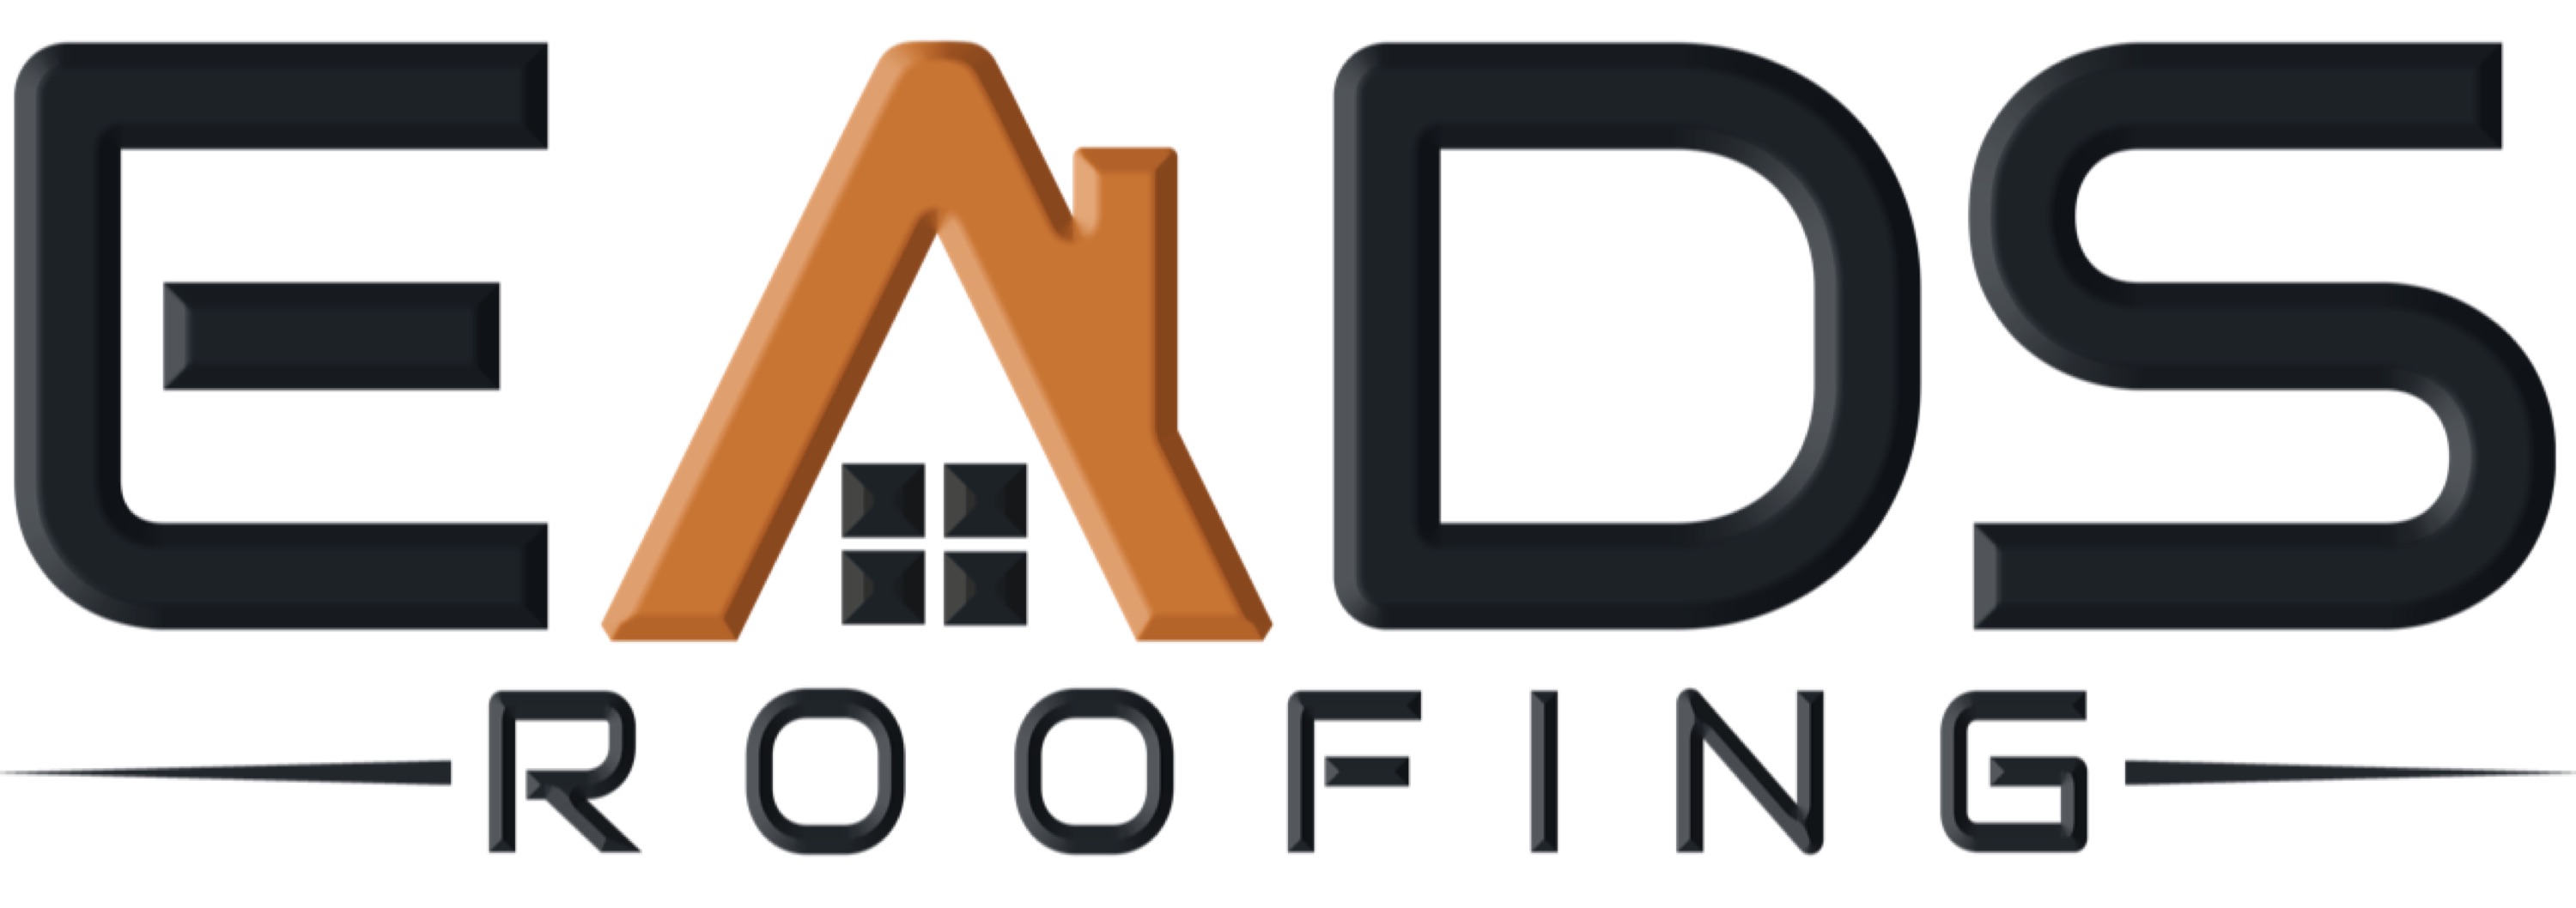 Eads Roofing, LLC Logo